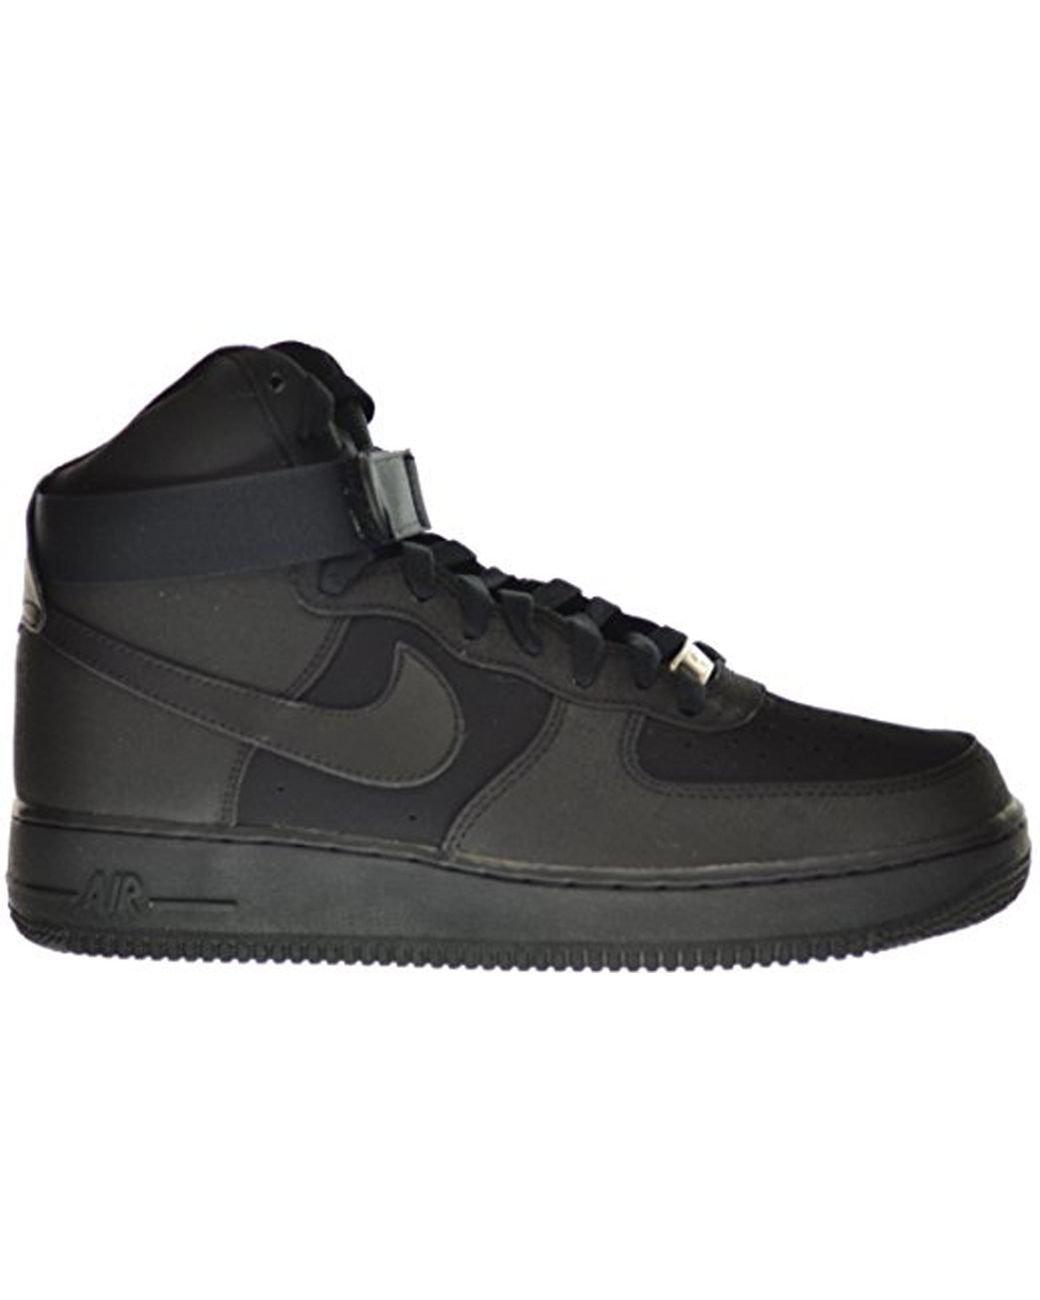 Nike Air Force 1 High Tech Tuff Black for Men - Lyst